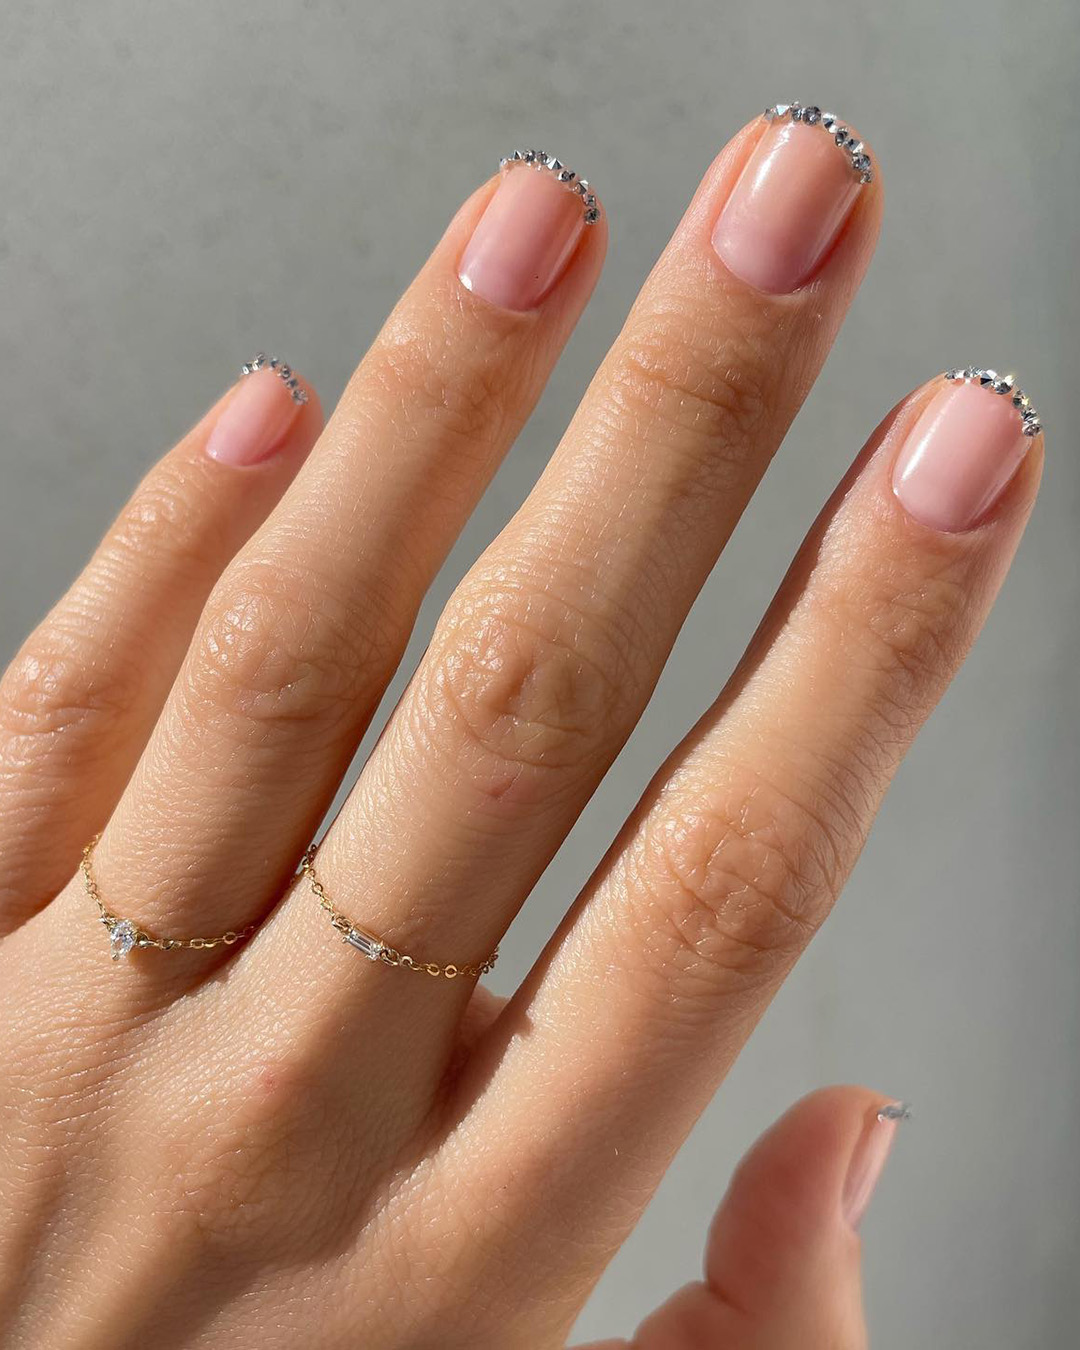 french wedding nails simple short with rhinestones betina_goldstein